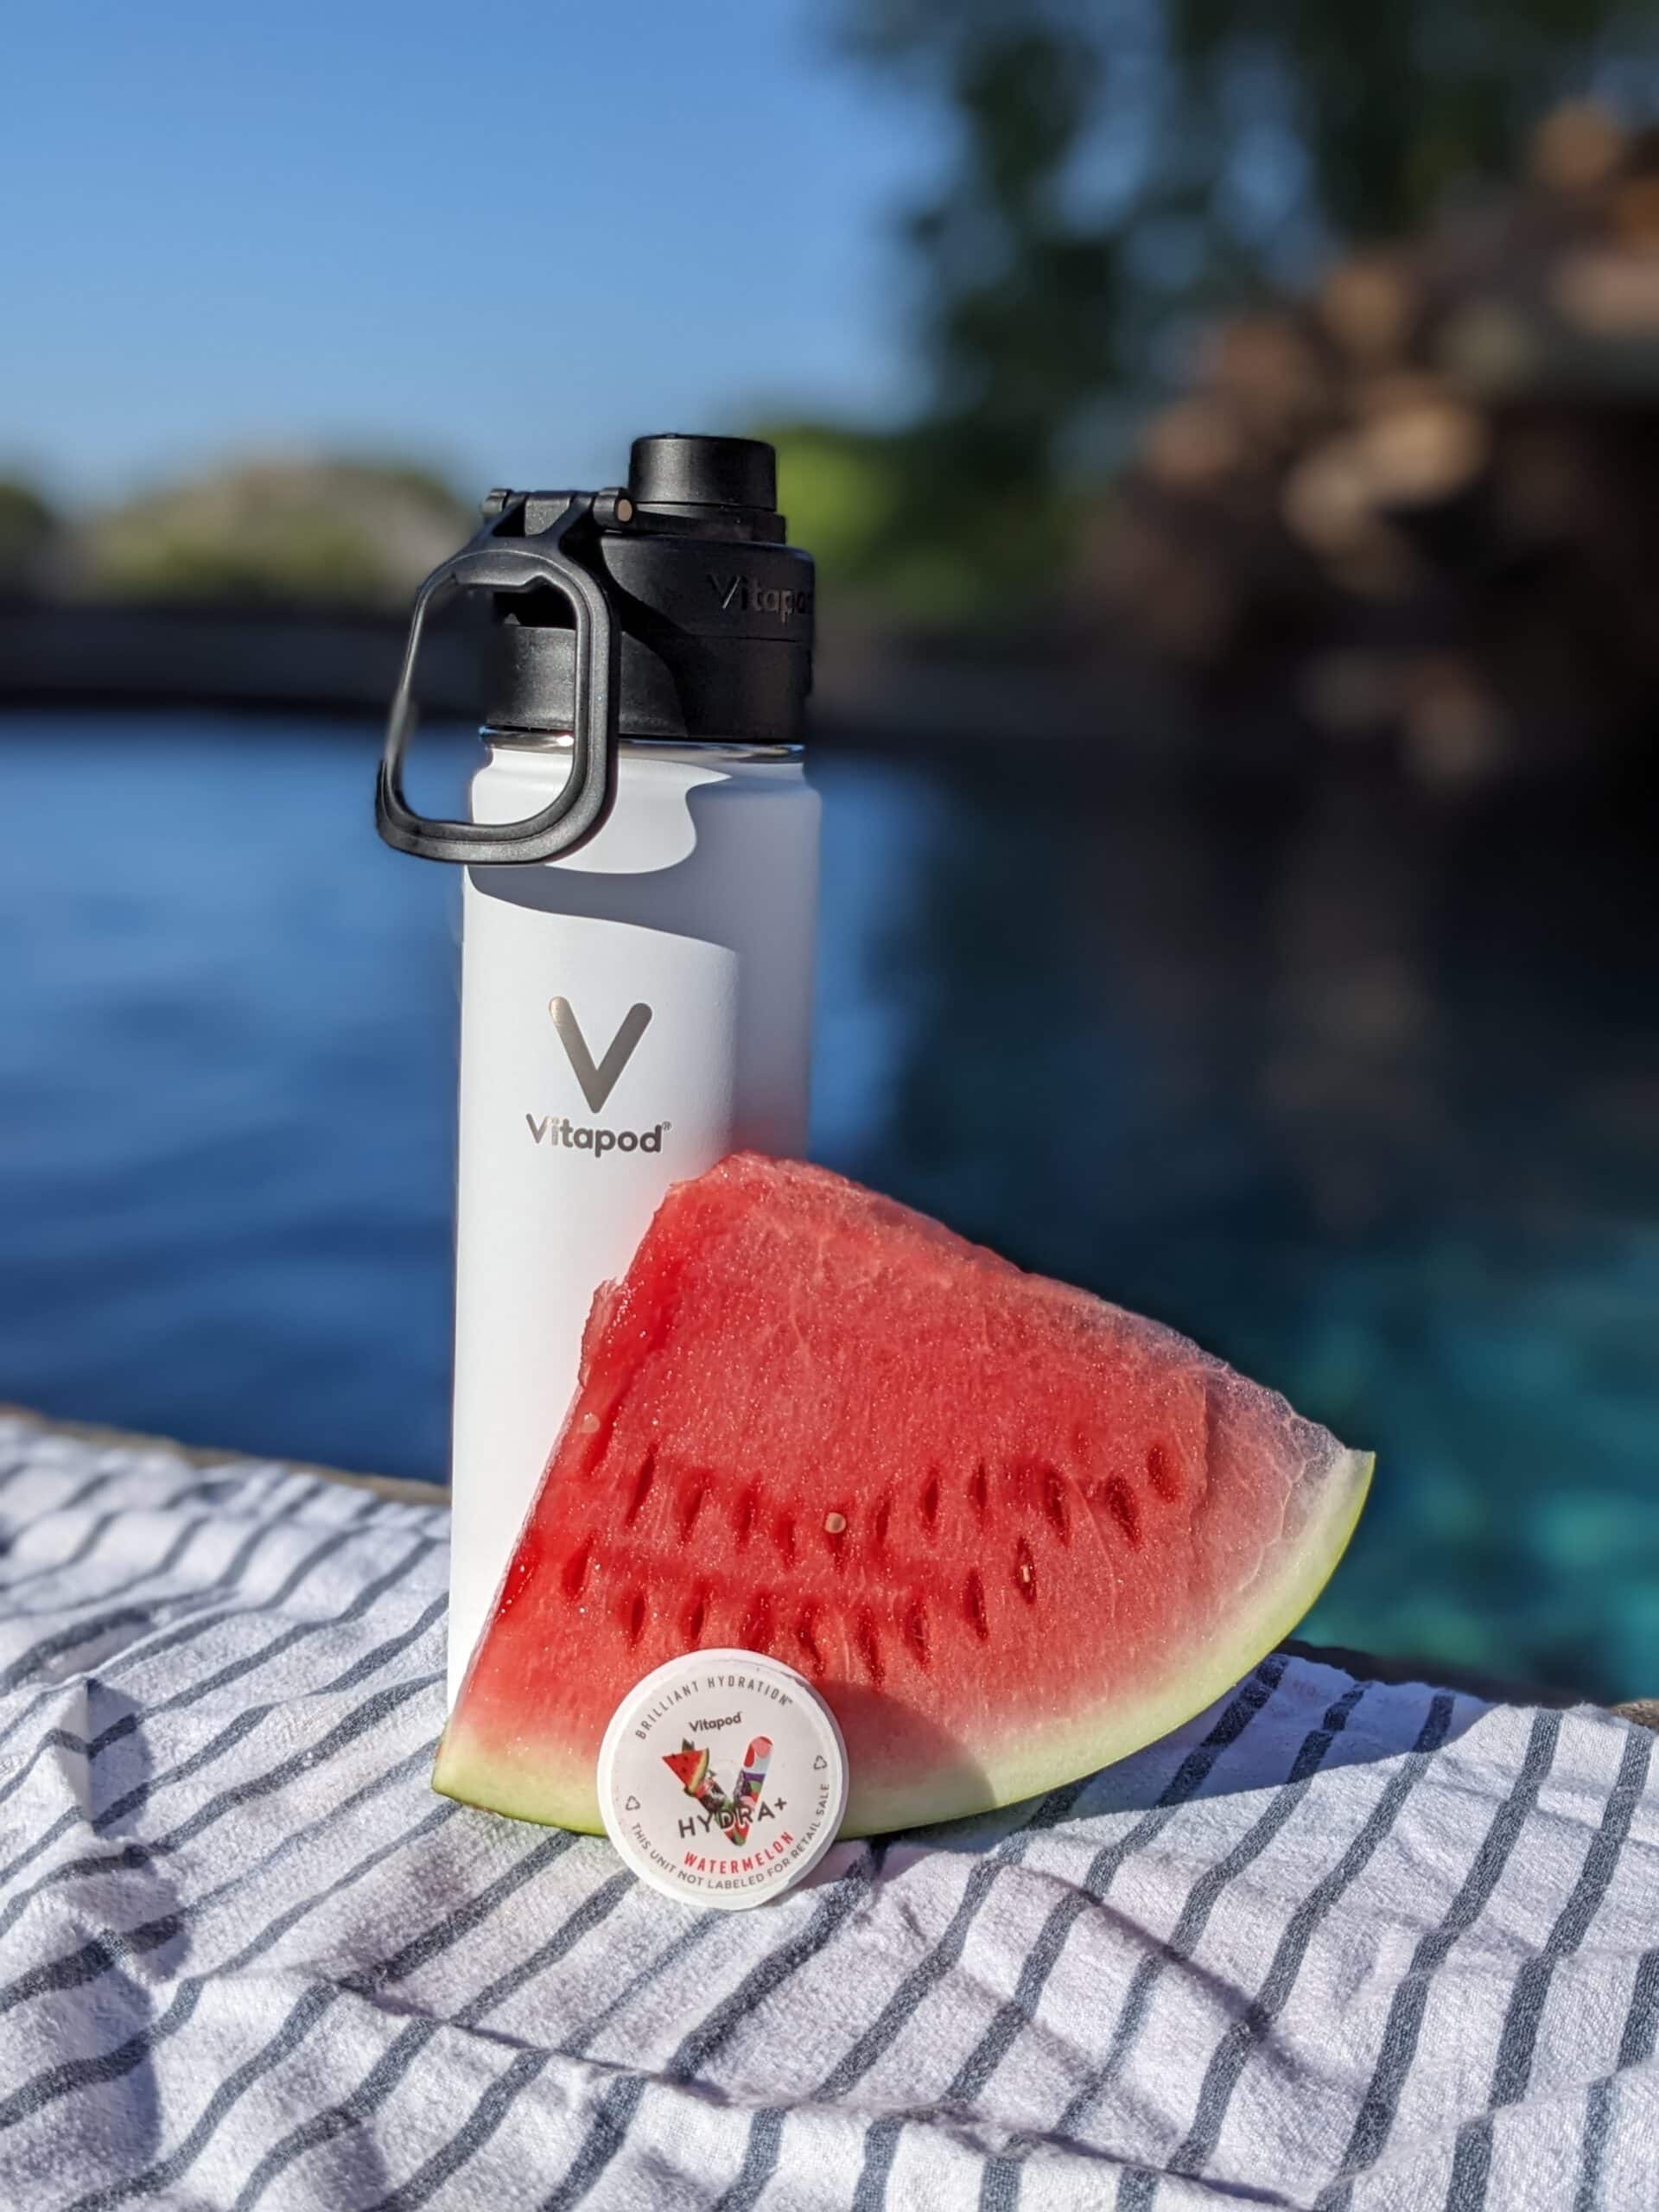 watermelon slice and Vitapod bottle